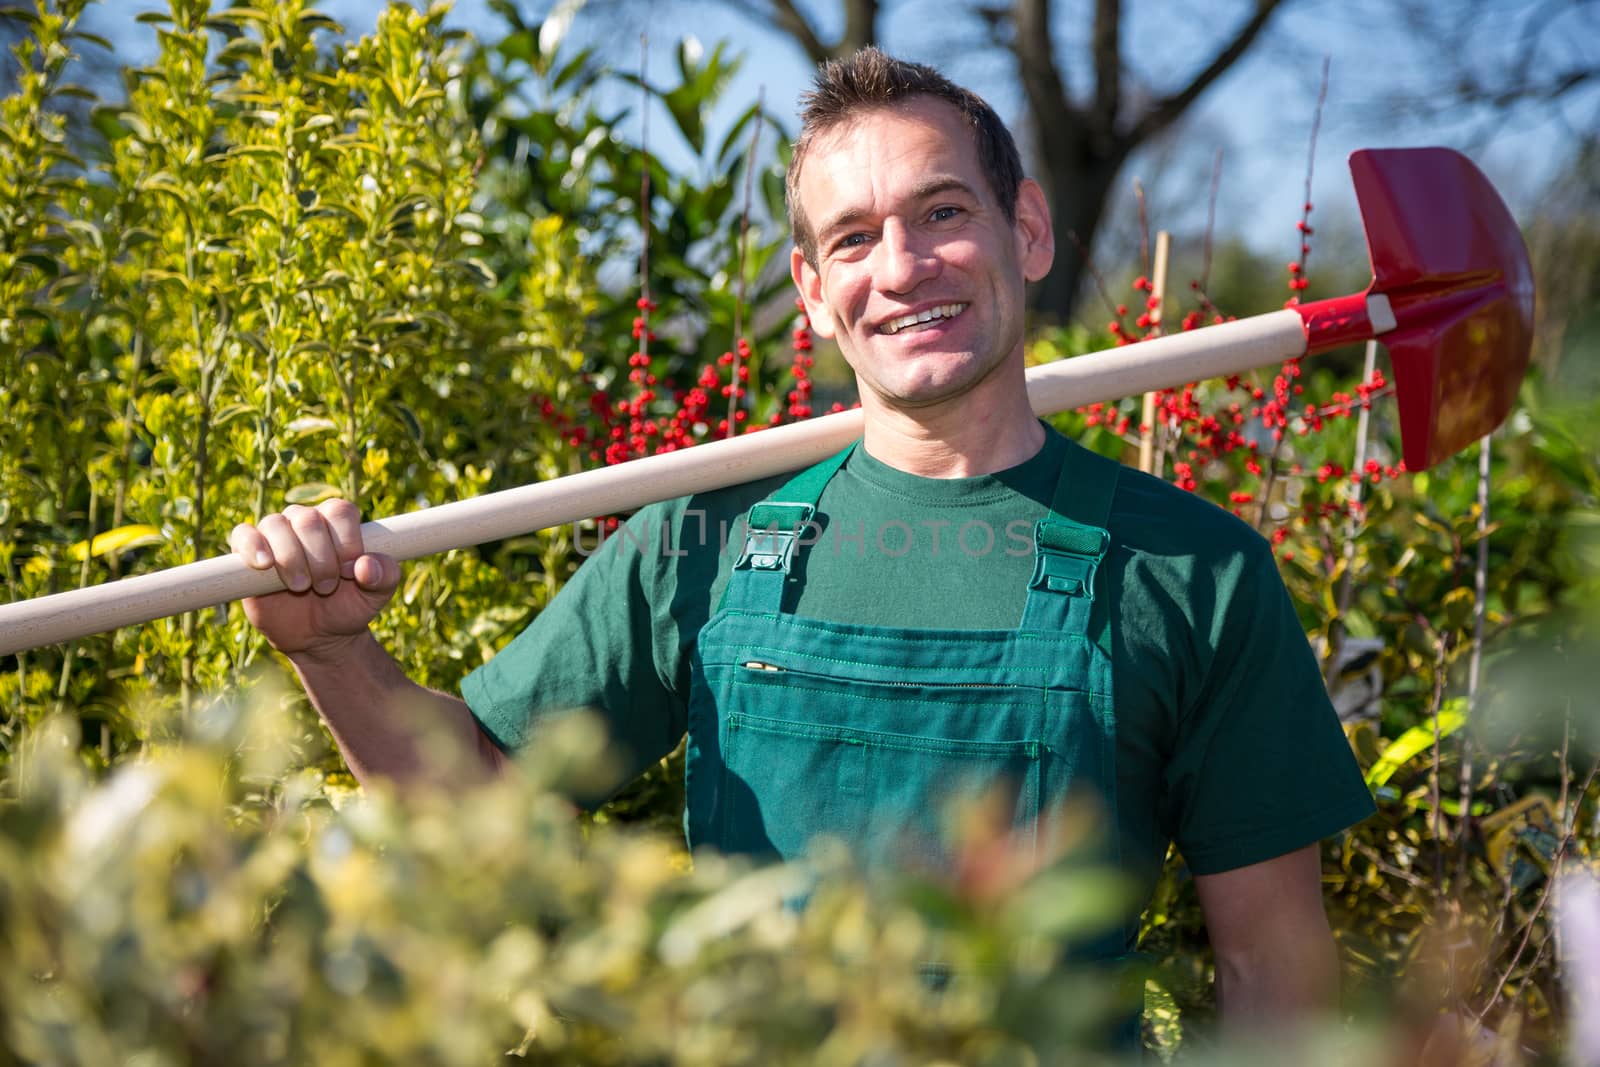 Farmer or gardener posing with shovel in garden nursery 